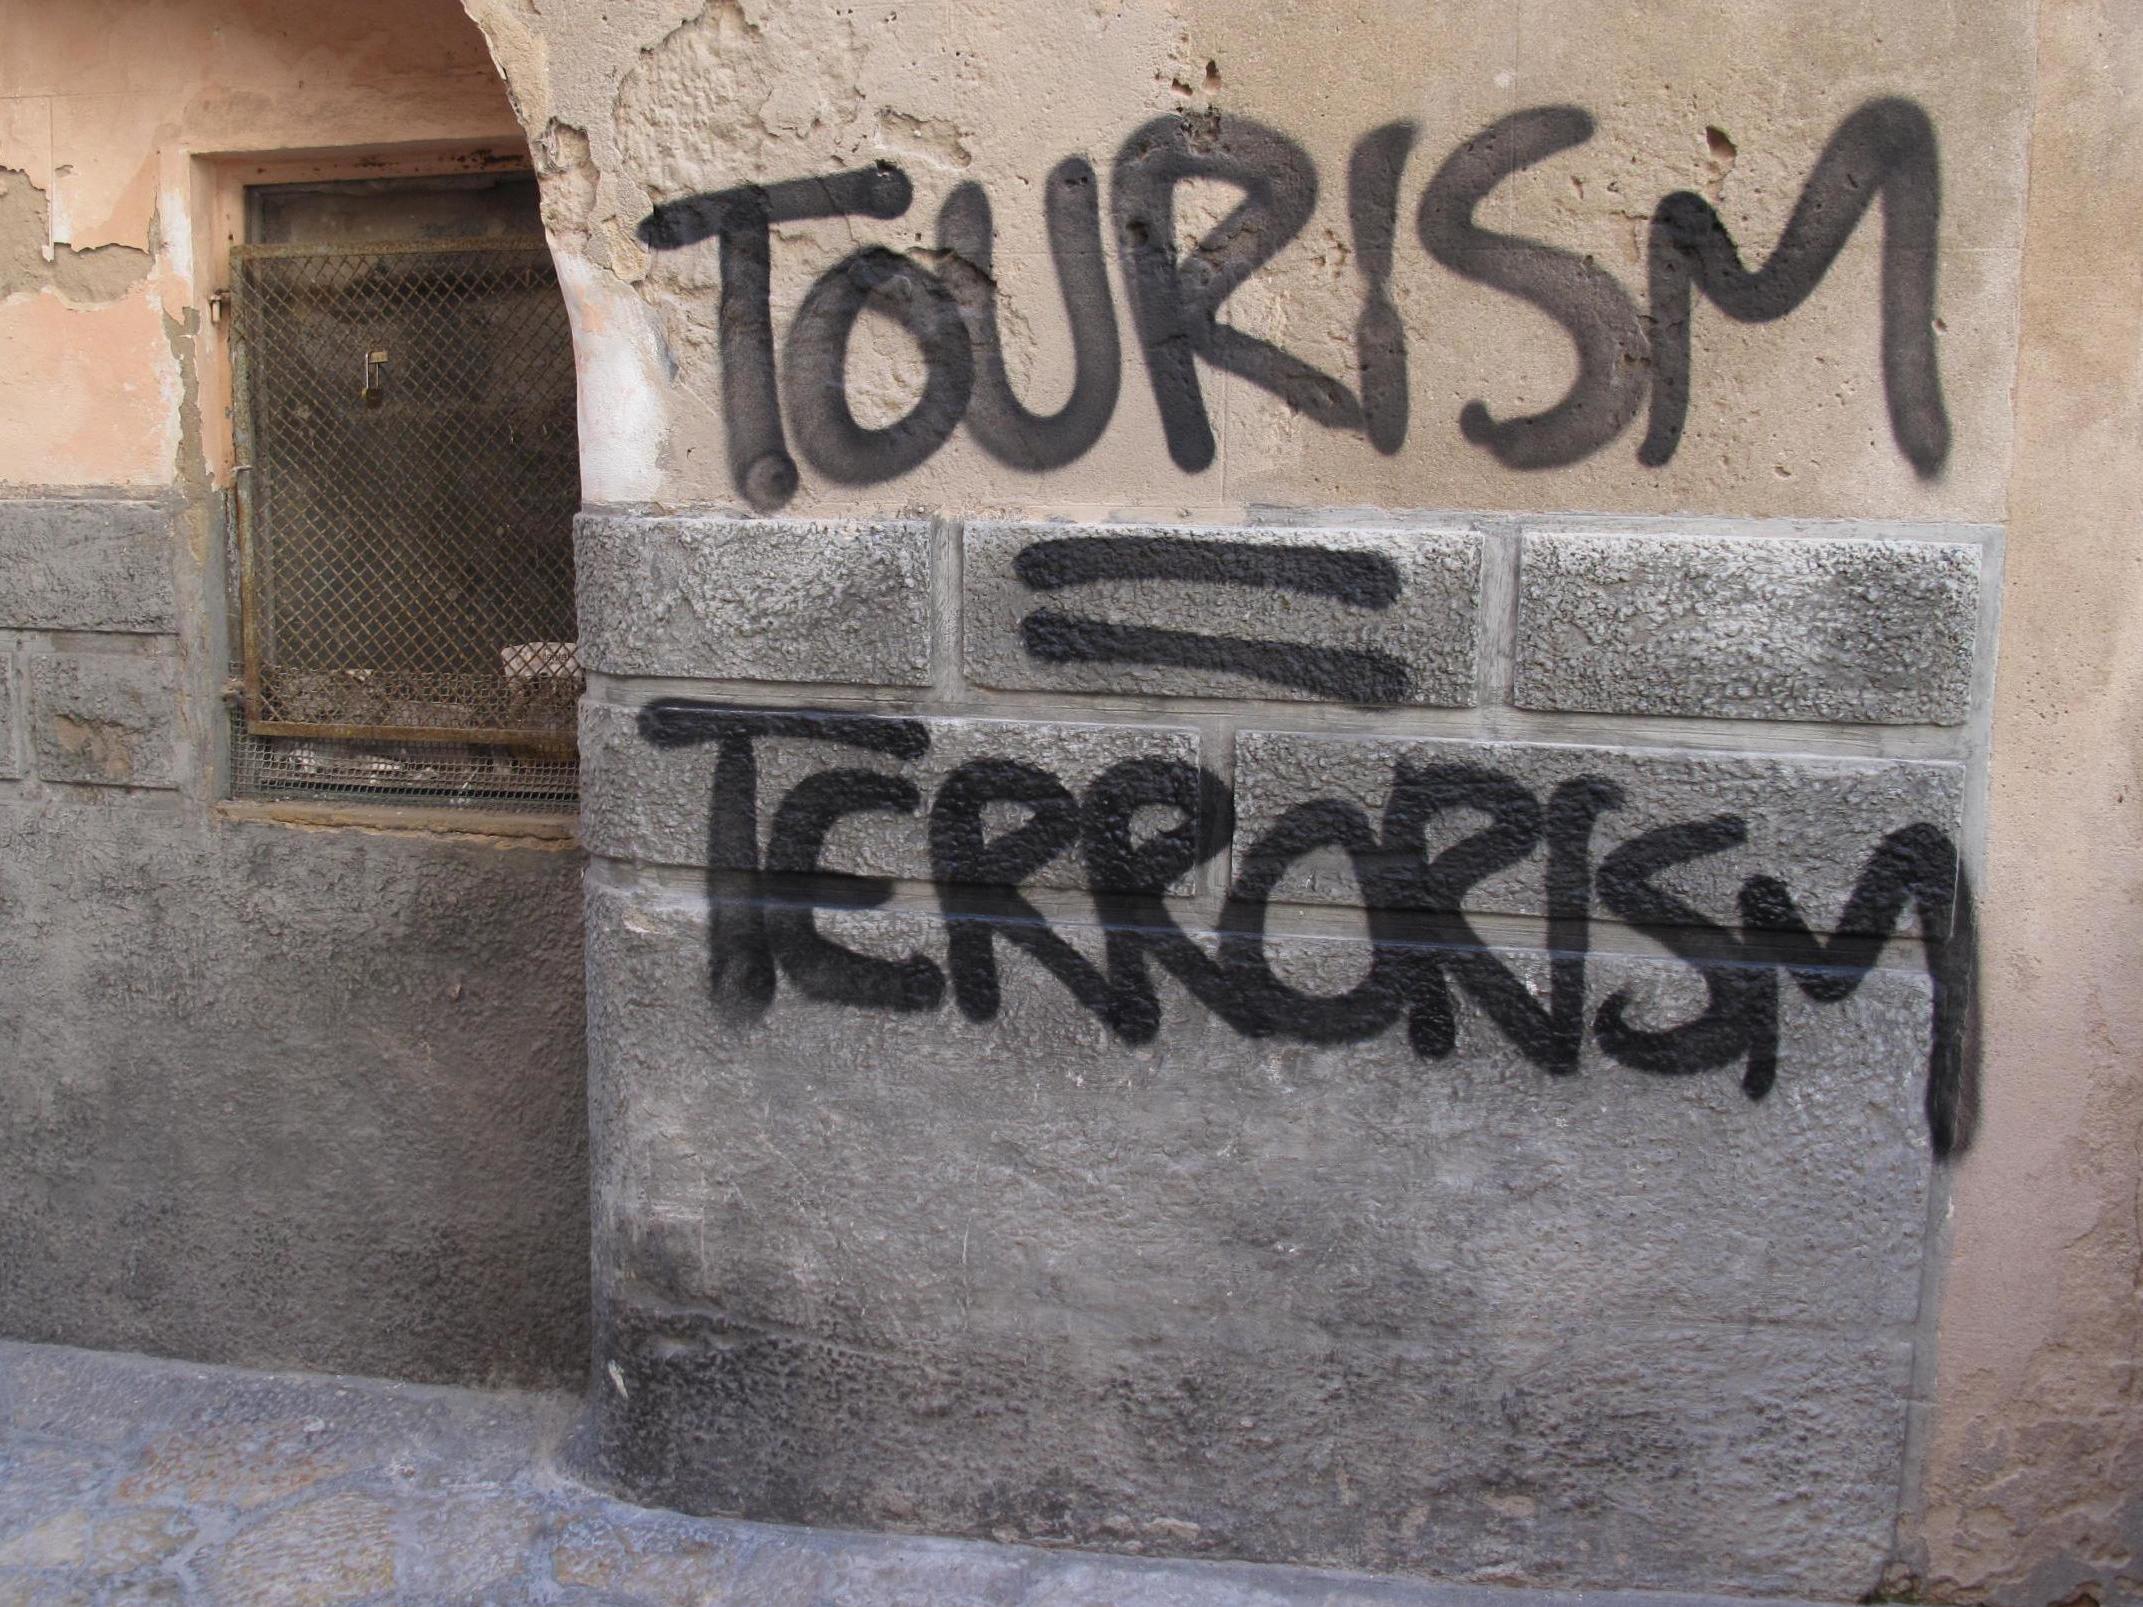 Graffiti in Palma, Mallorca.